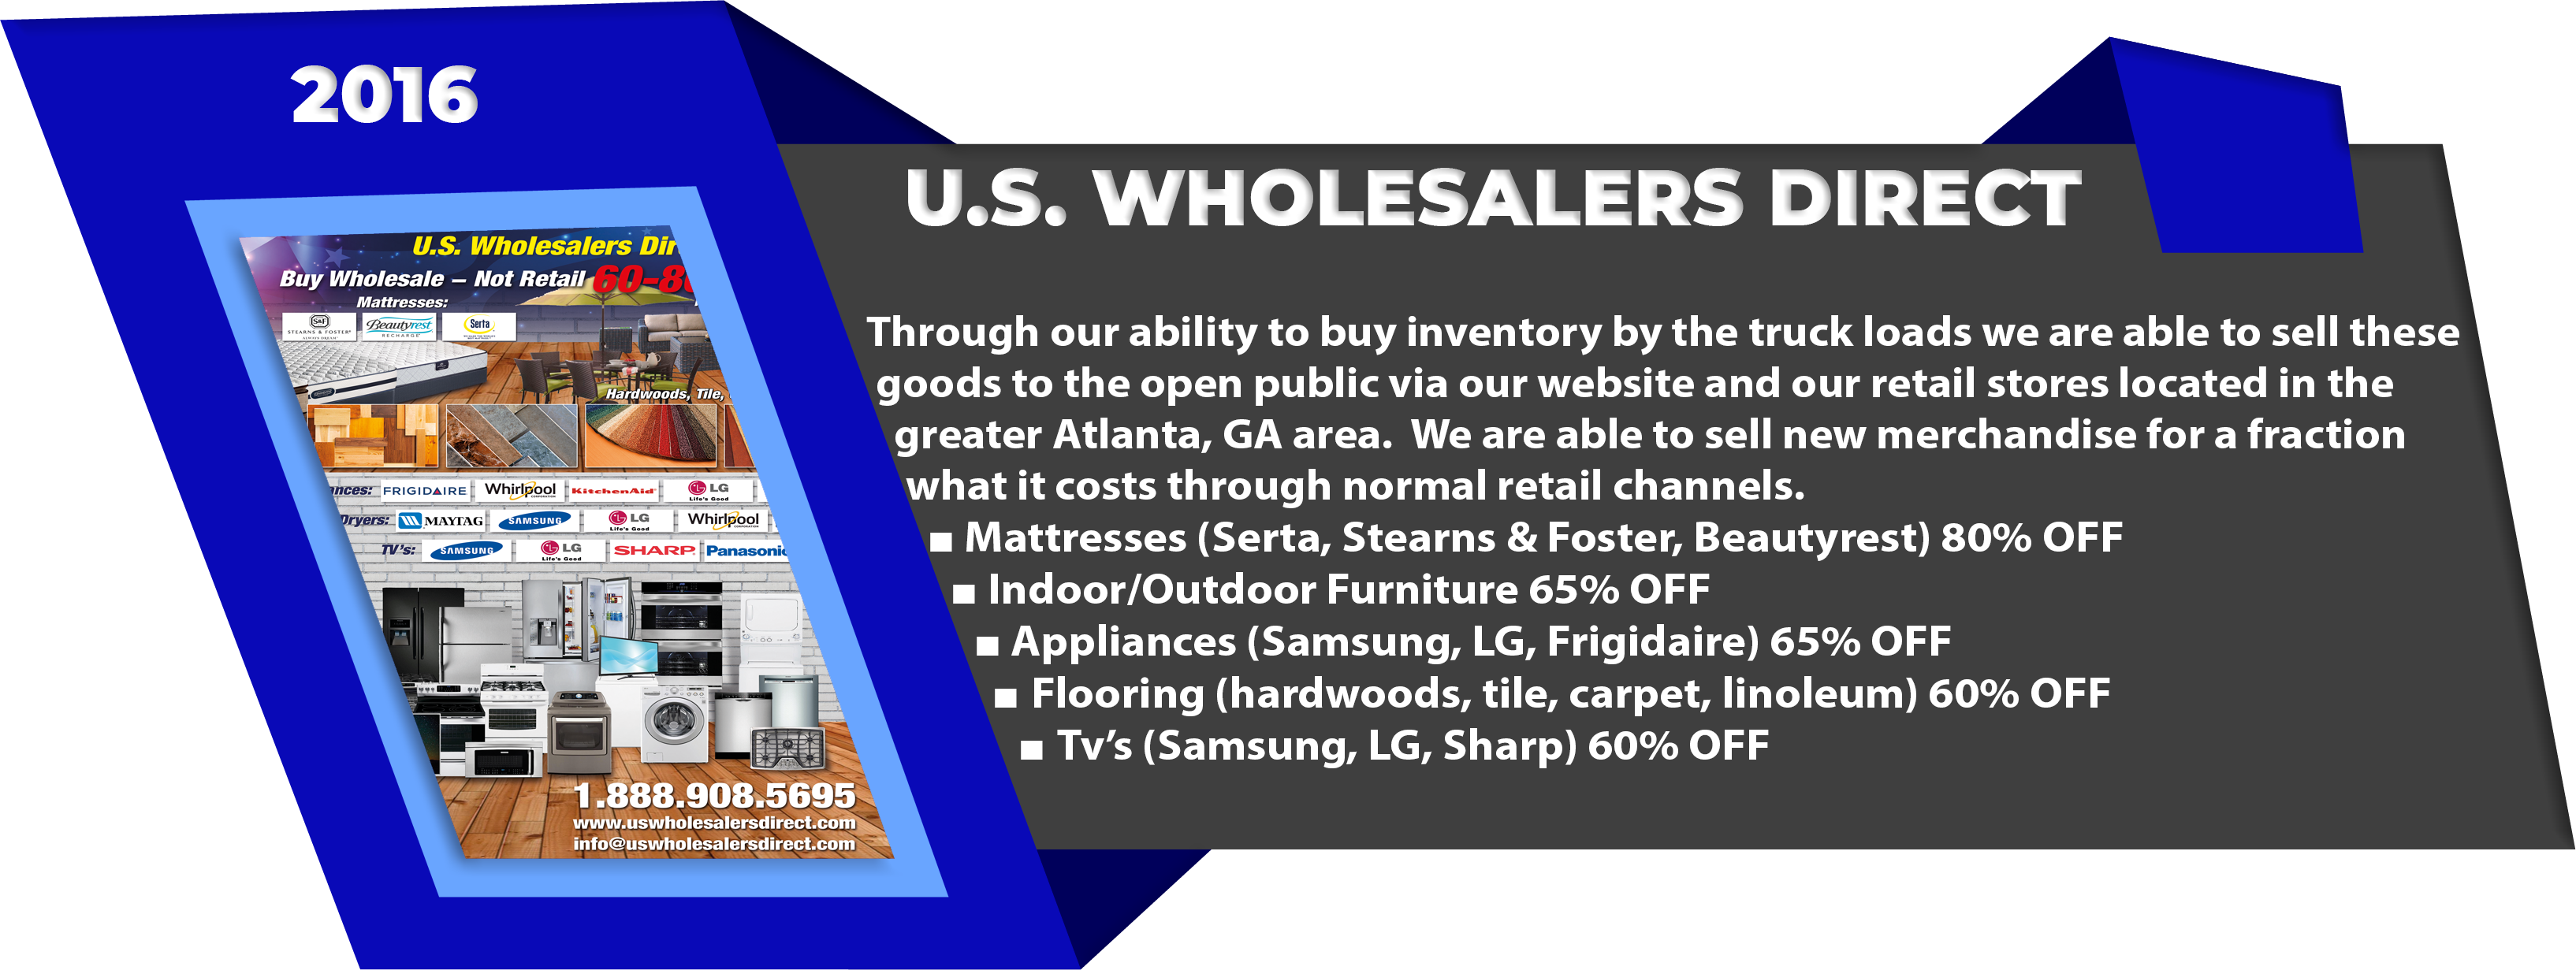 U.S.-Wholesalers-Direct-2016-2